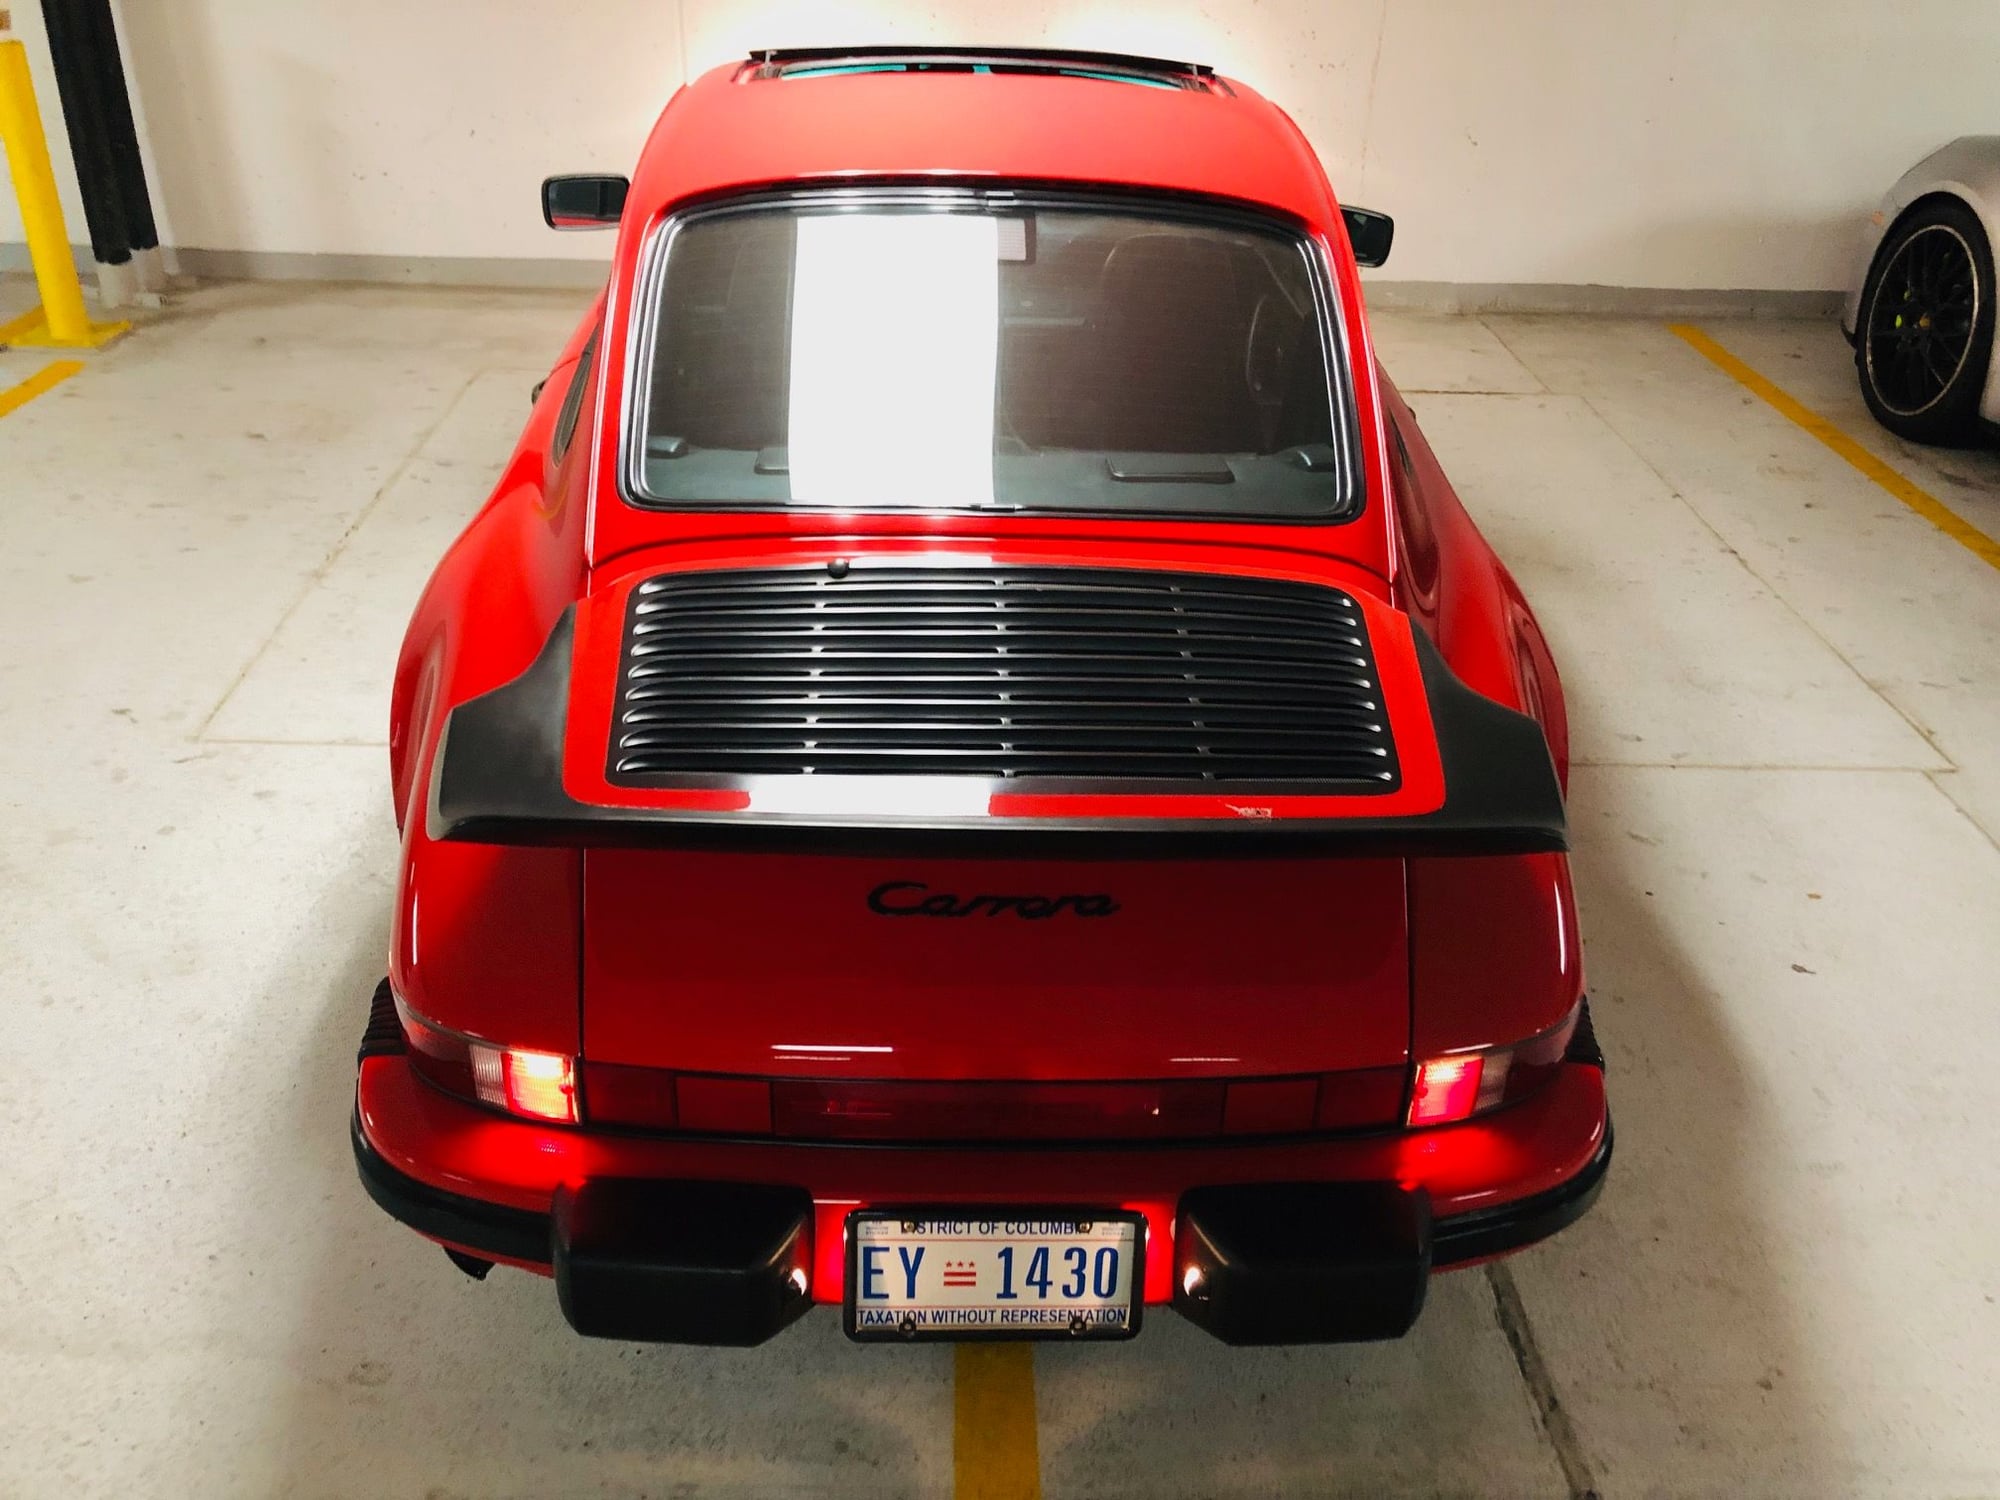 1989 Porsche 911 - 1989 Porsche 911 Carrera G50 - FS - Used - VIN wp0ab0910ks12043 - 114,000 Miles - 6 cyl - 2WD - Manual - Coupe - Red - Washington, DC 20002, United States